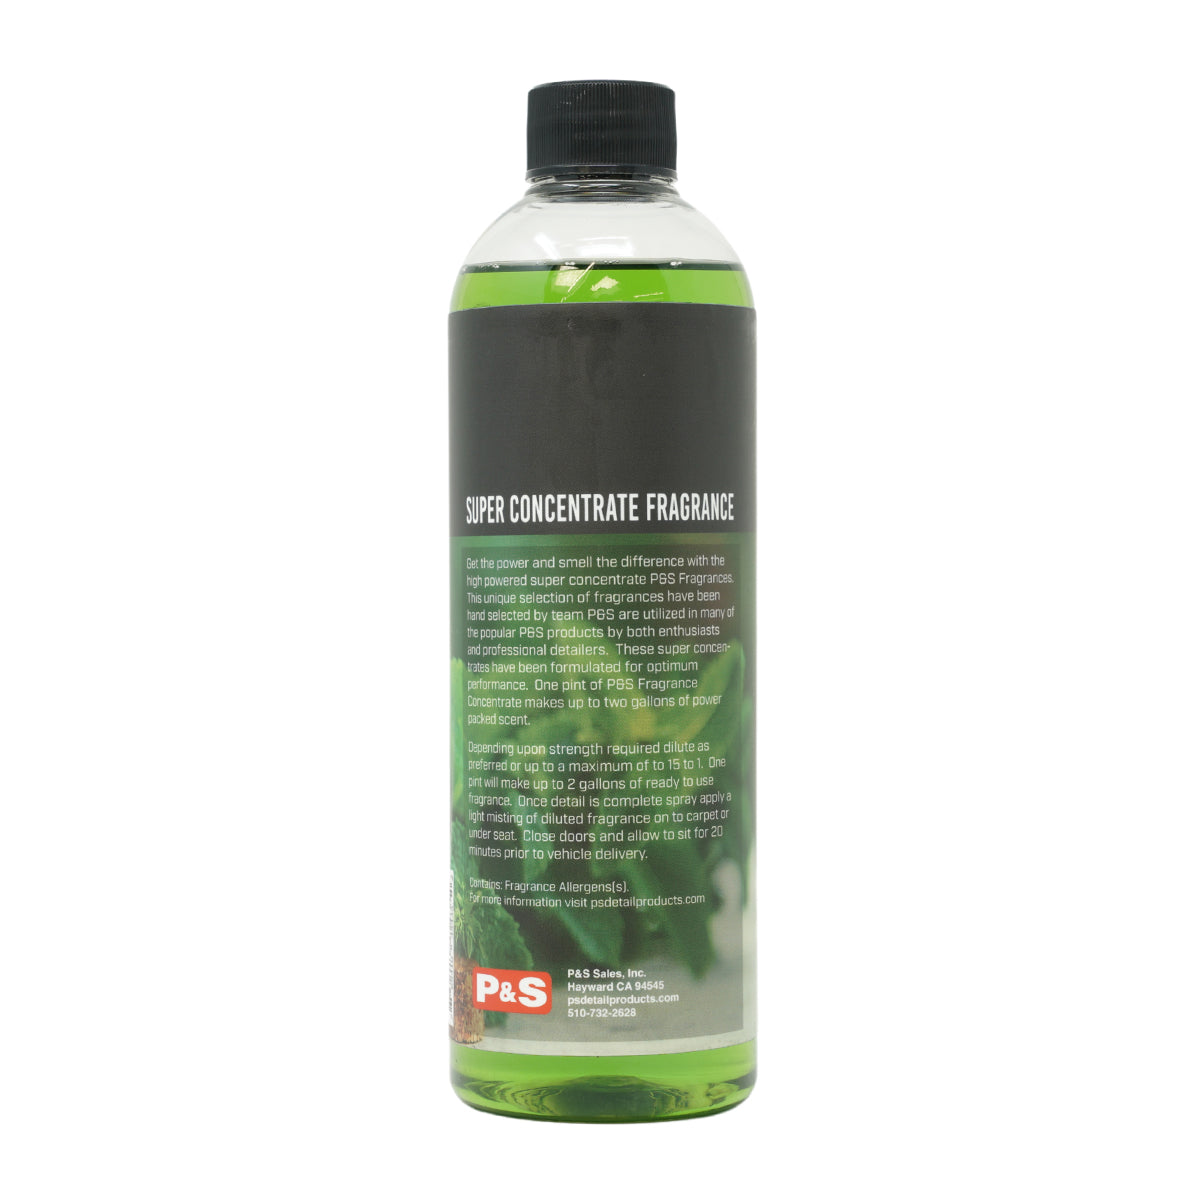 P&S Eucalyptus Air Freshener (Mint Tea Essence - Fresh) Concentrate 473ml